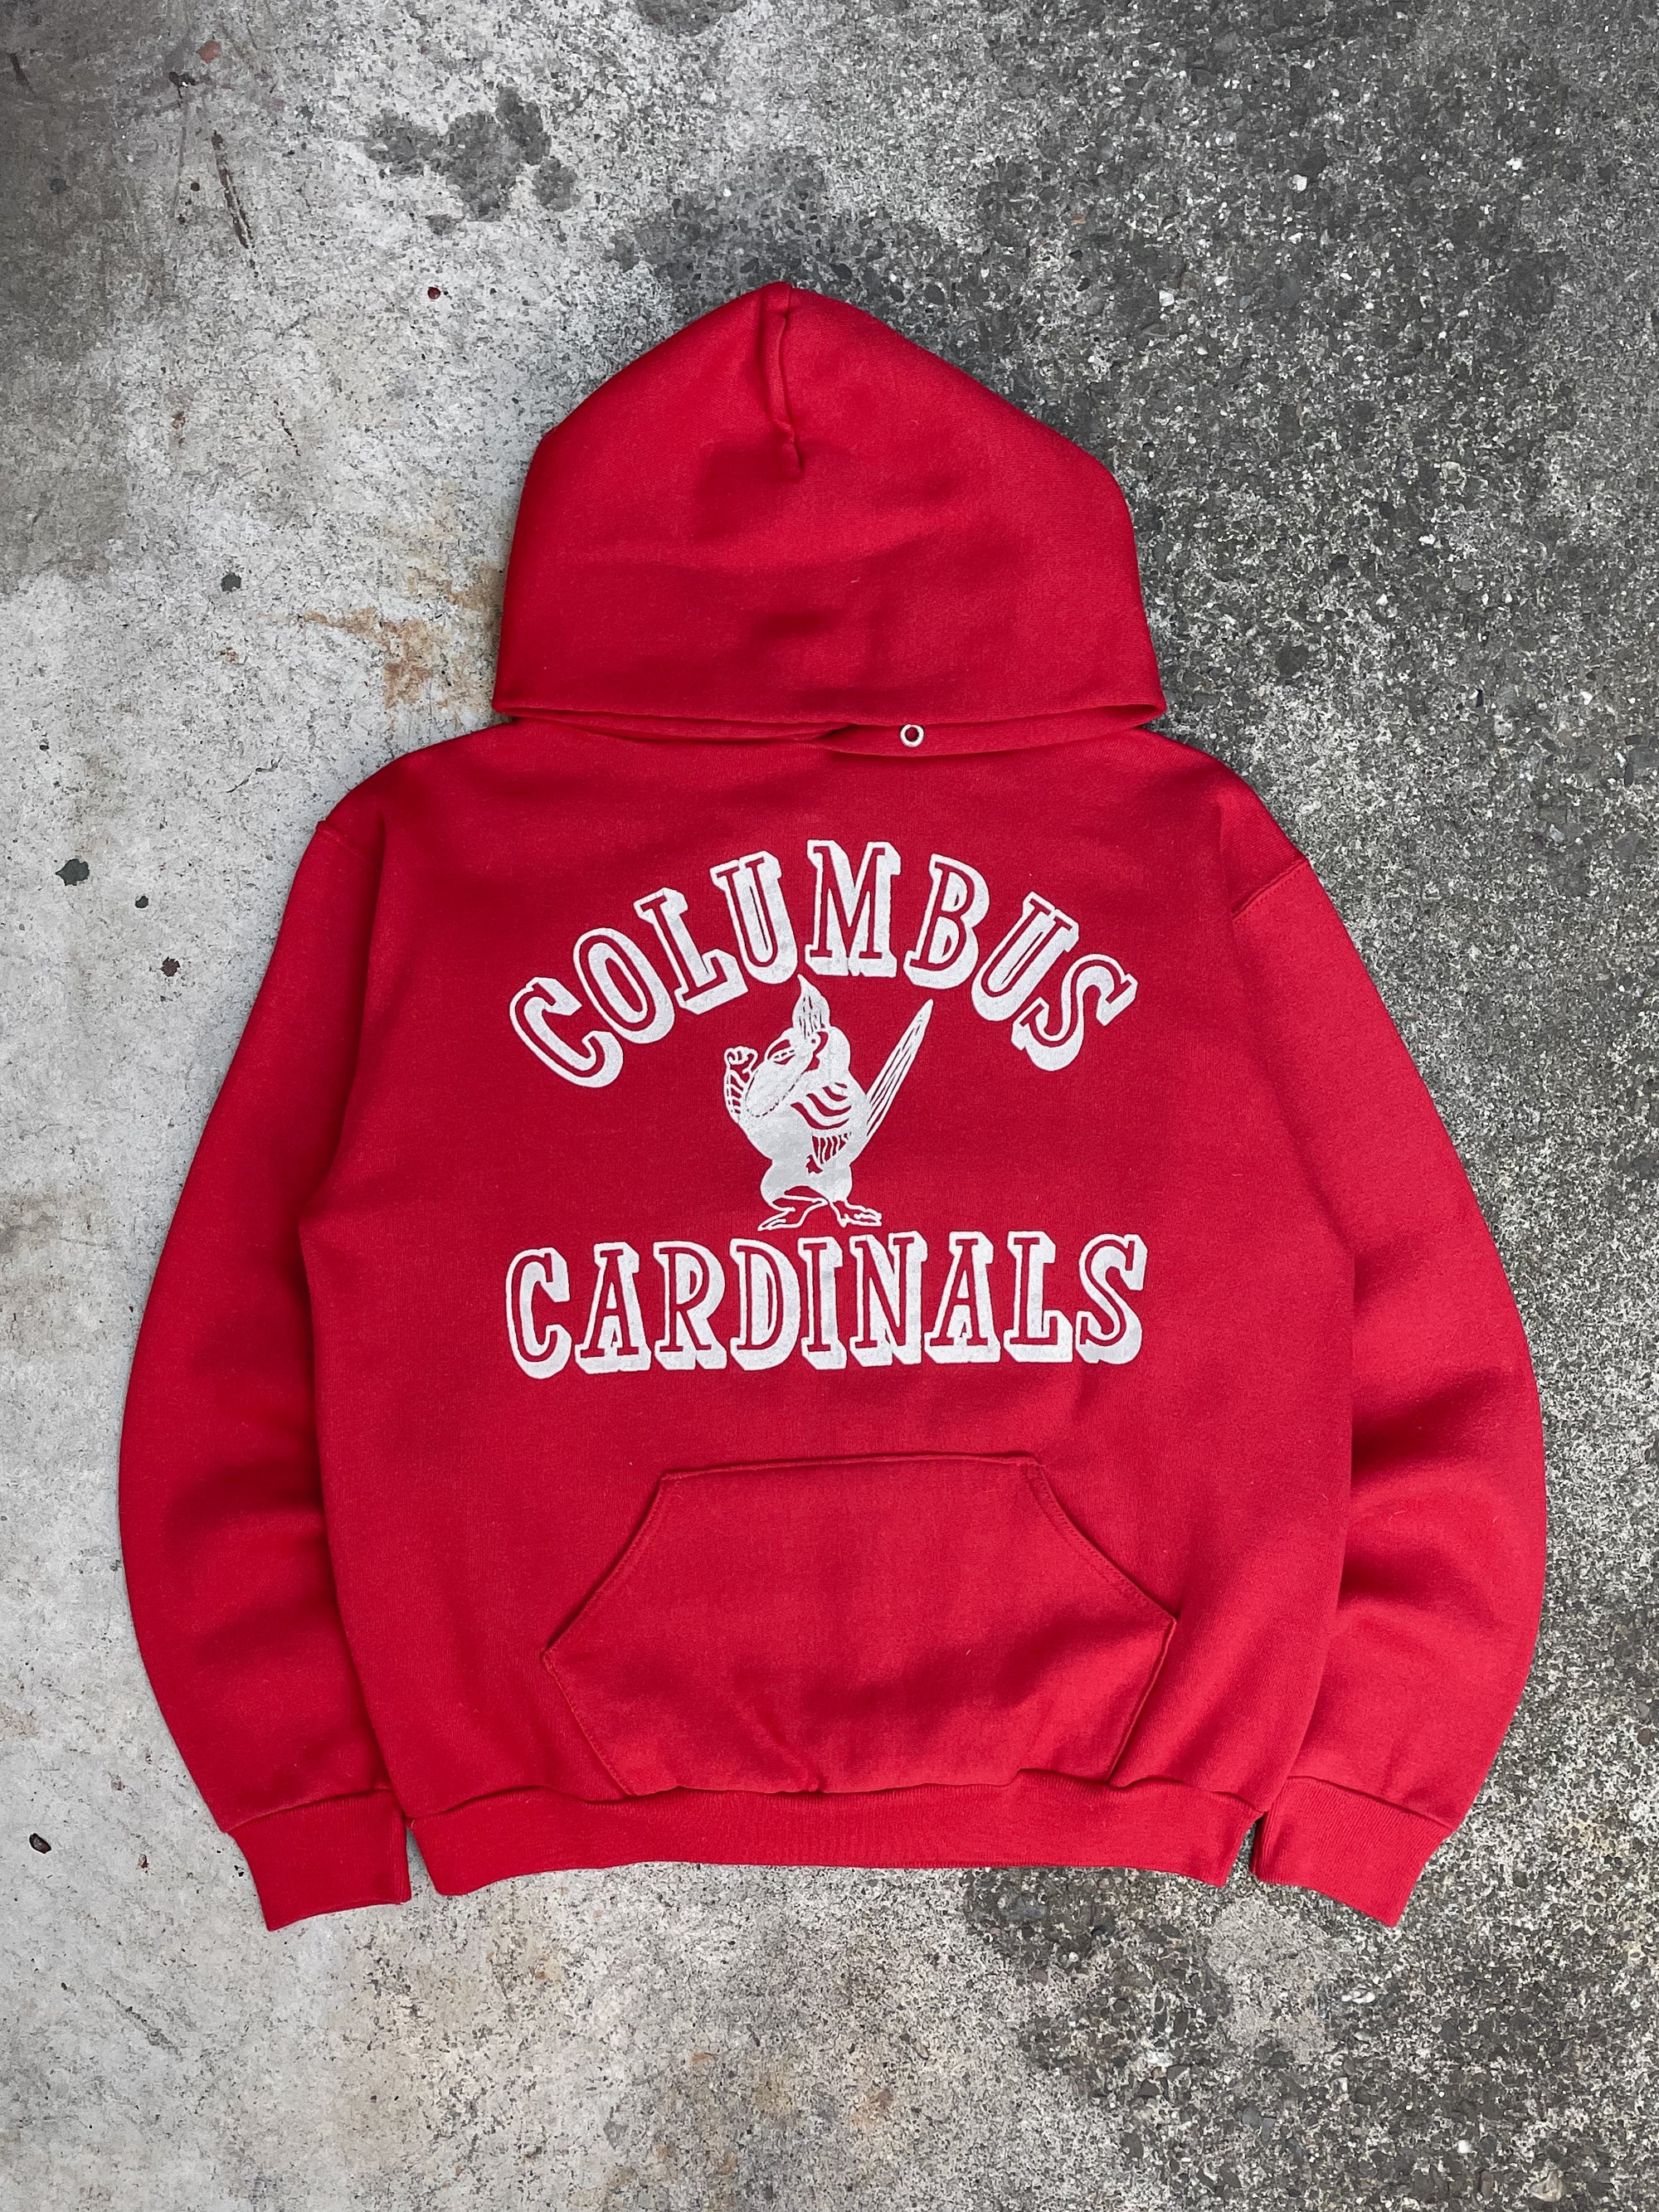 1970s Russell “Columbus Cardinals” Hoodie (M)